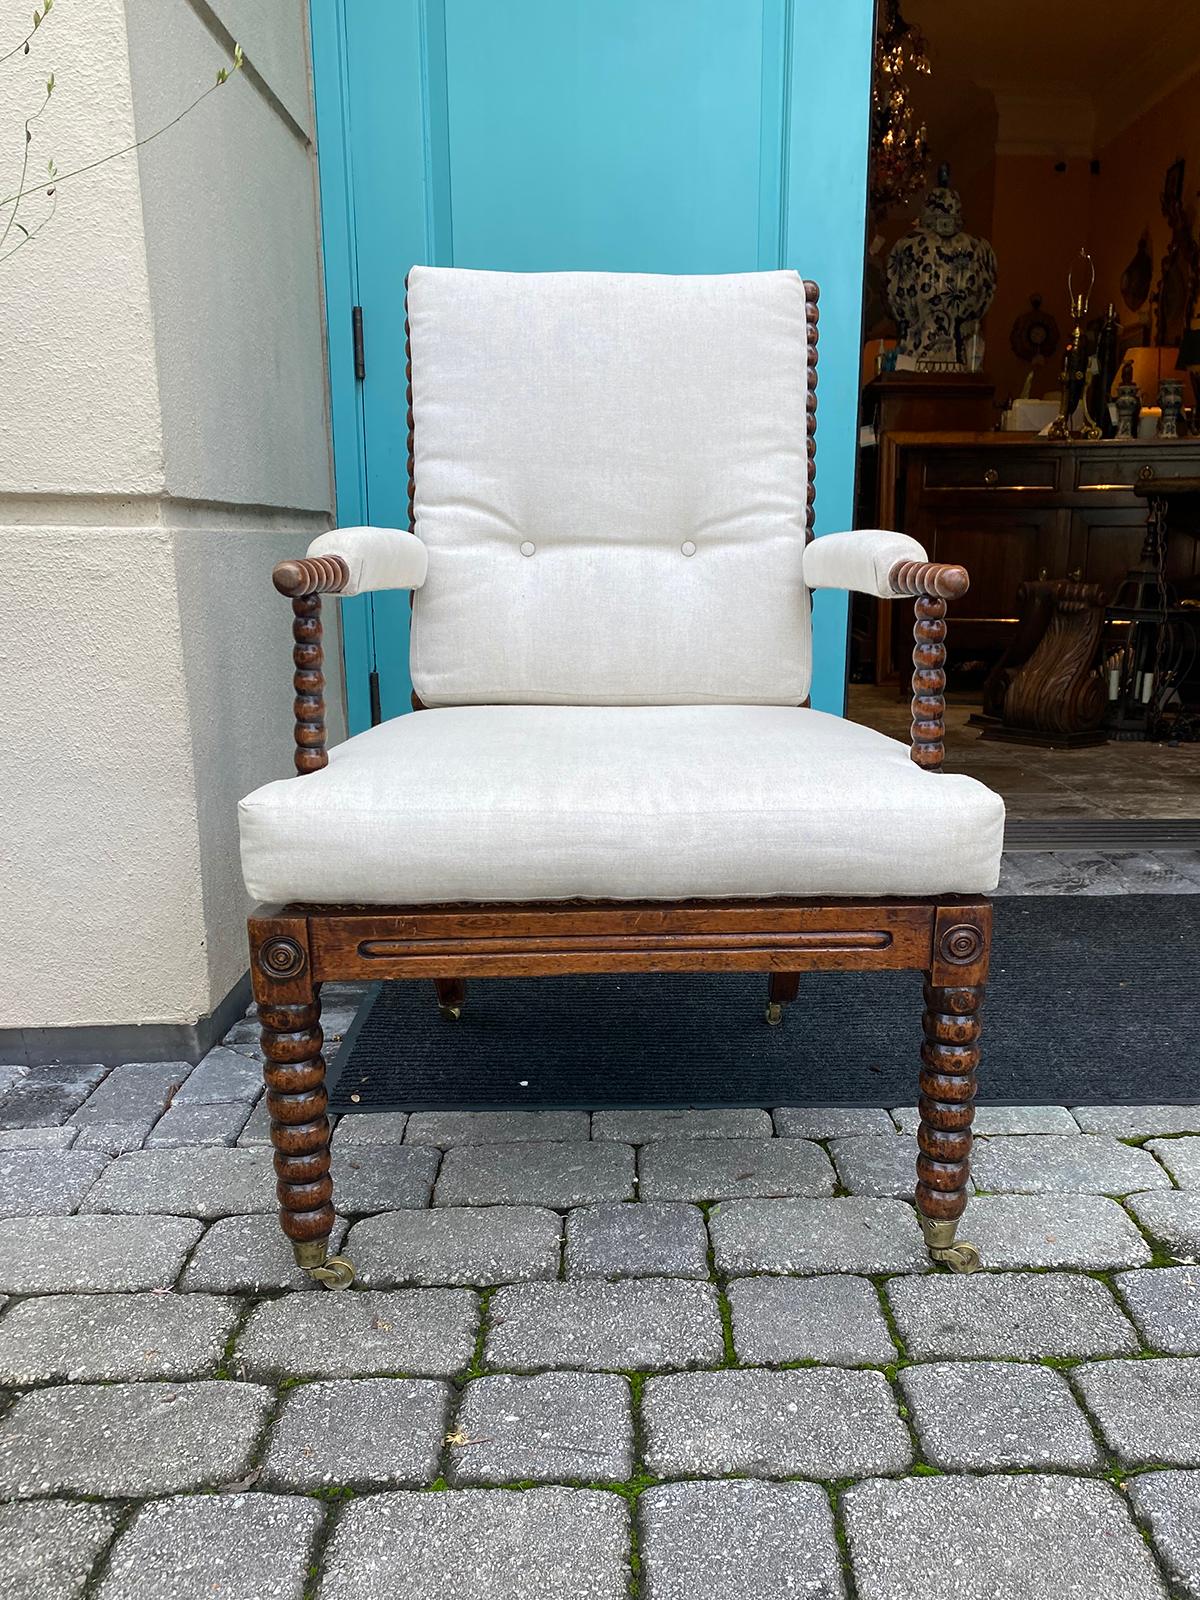 Circa 1850 American bobbin chair.
Measures: 24